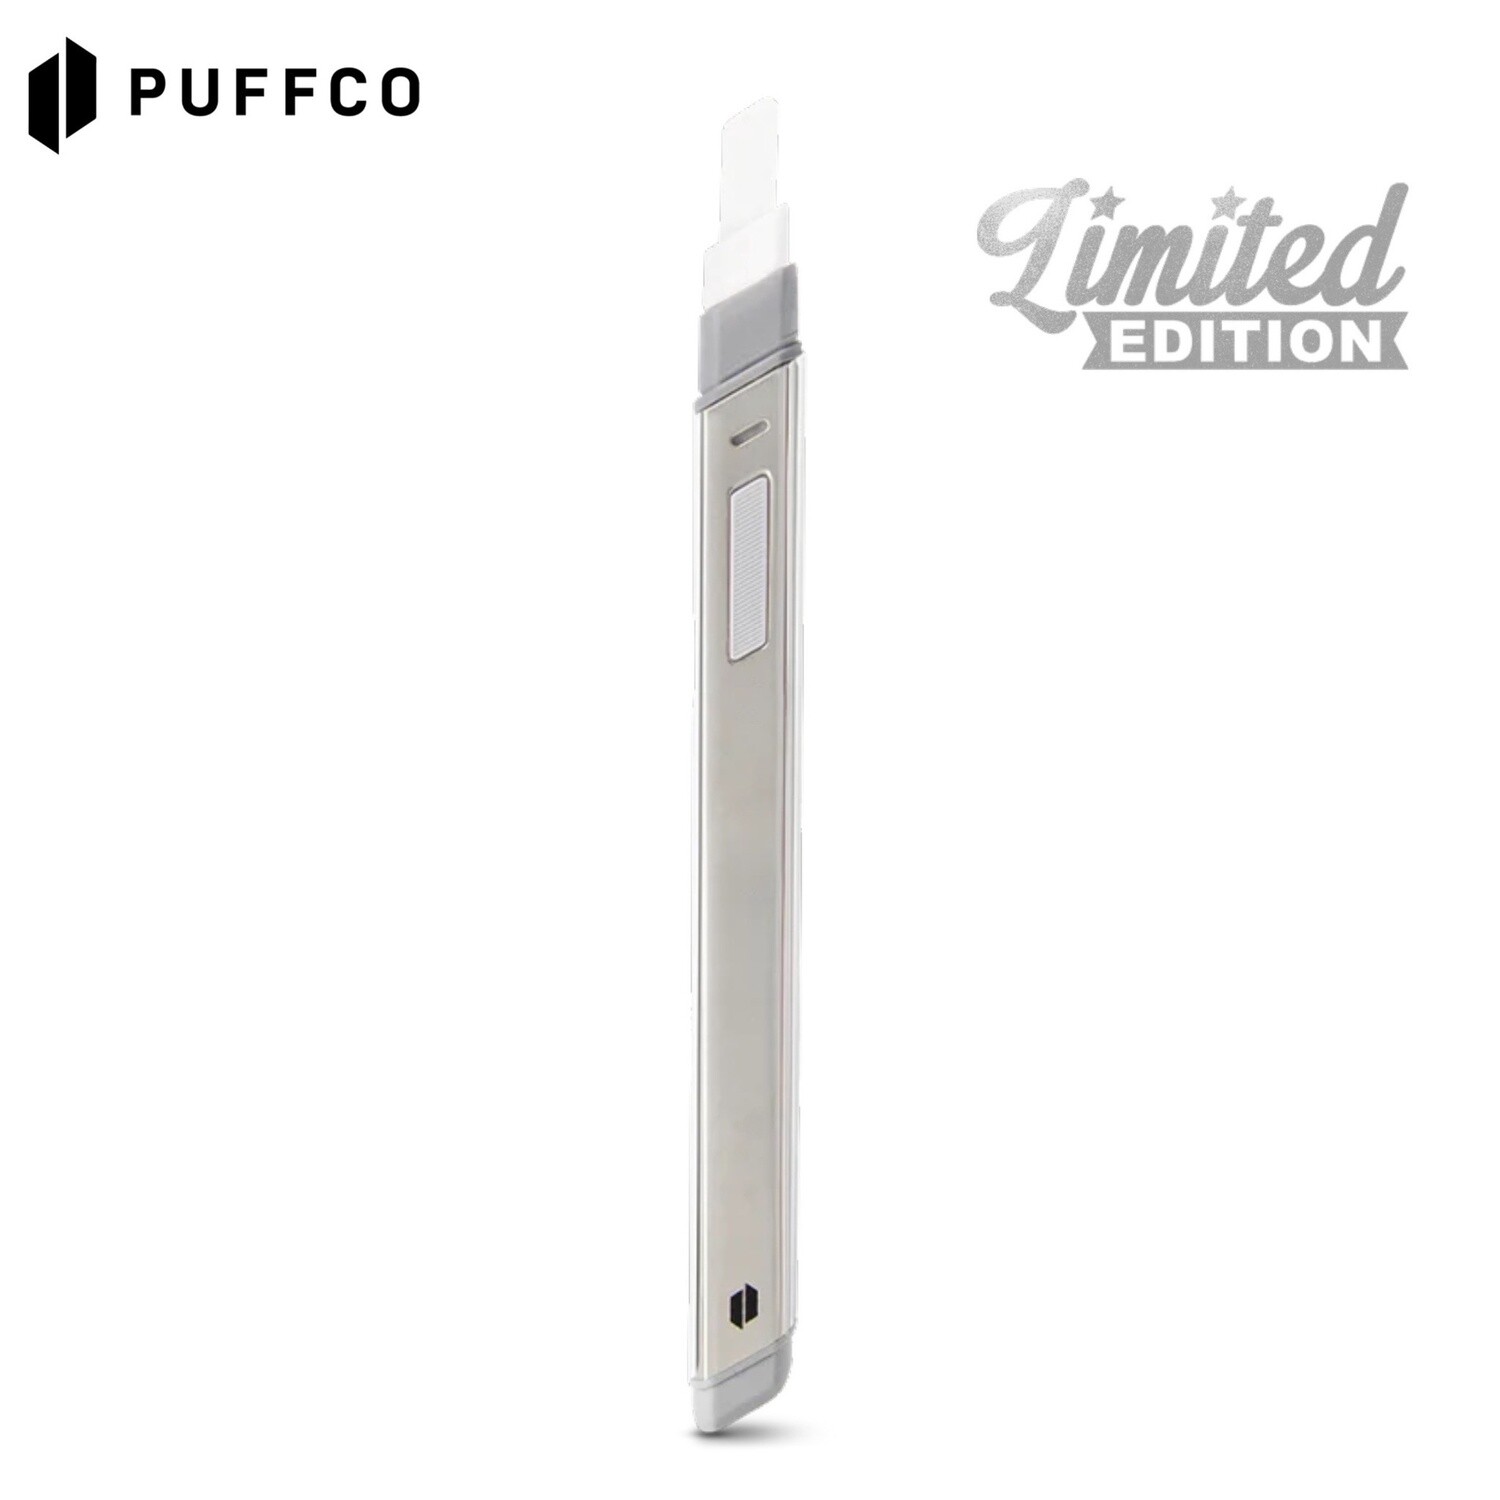 Puffco® Hot Knife